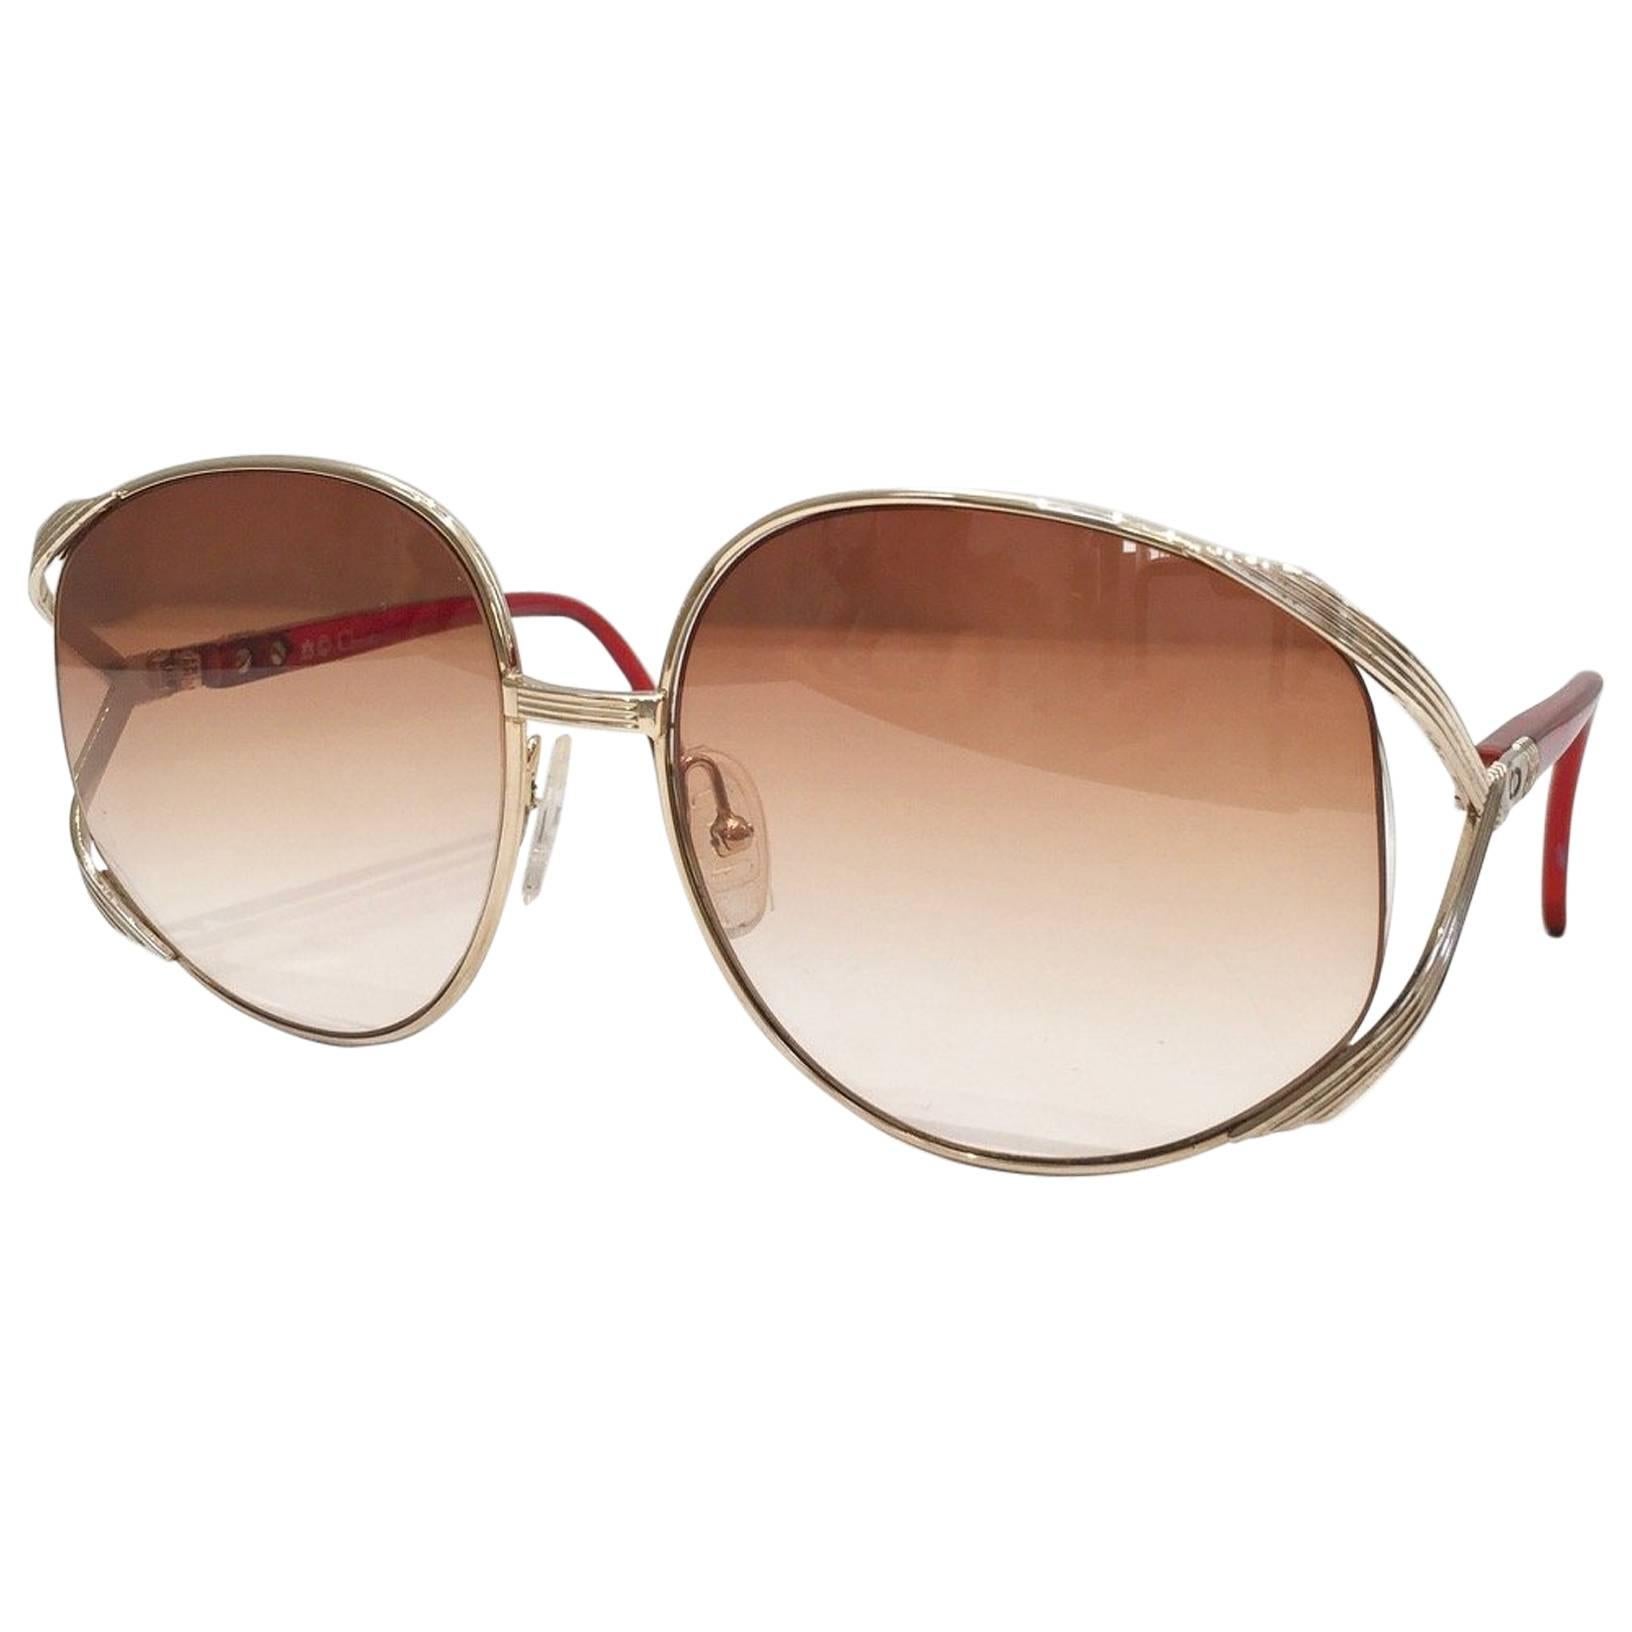 1970s Dior sunglasses 